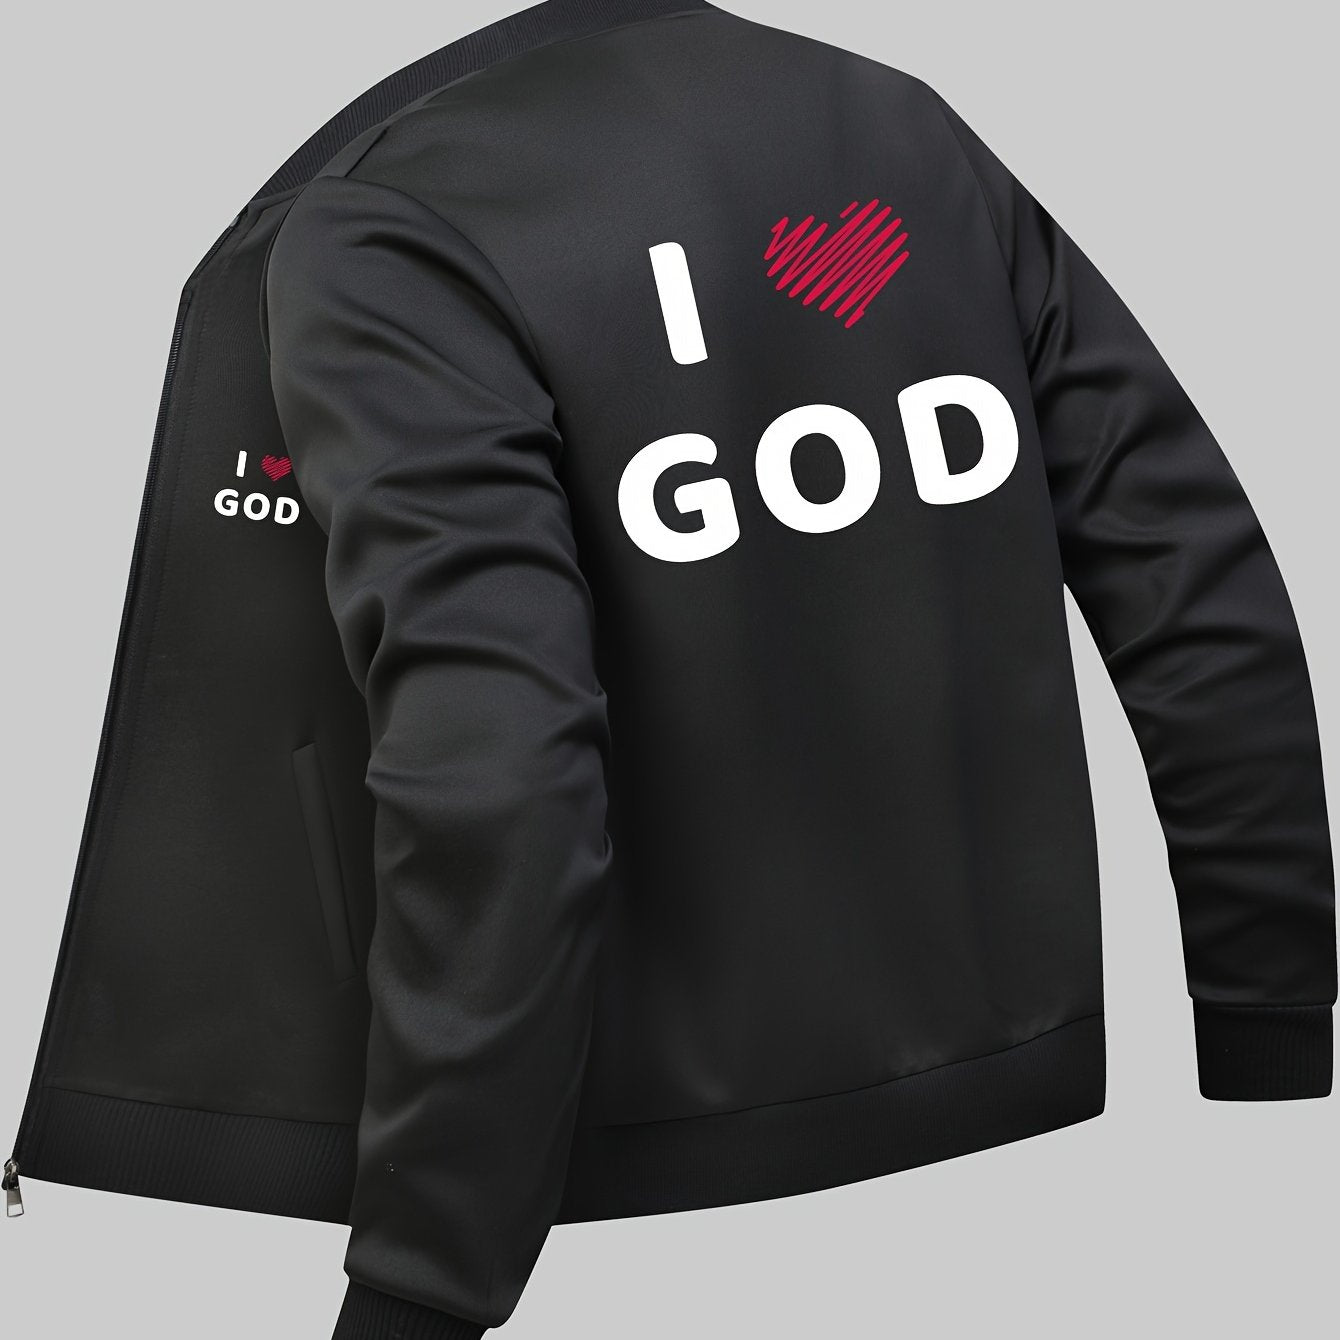 Men's I Love God Print Bomber Jacket, Casual Zip-up Jacket With Pockets claimedbygoddesigns